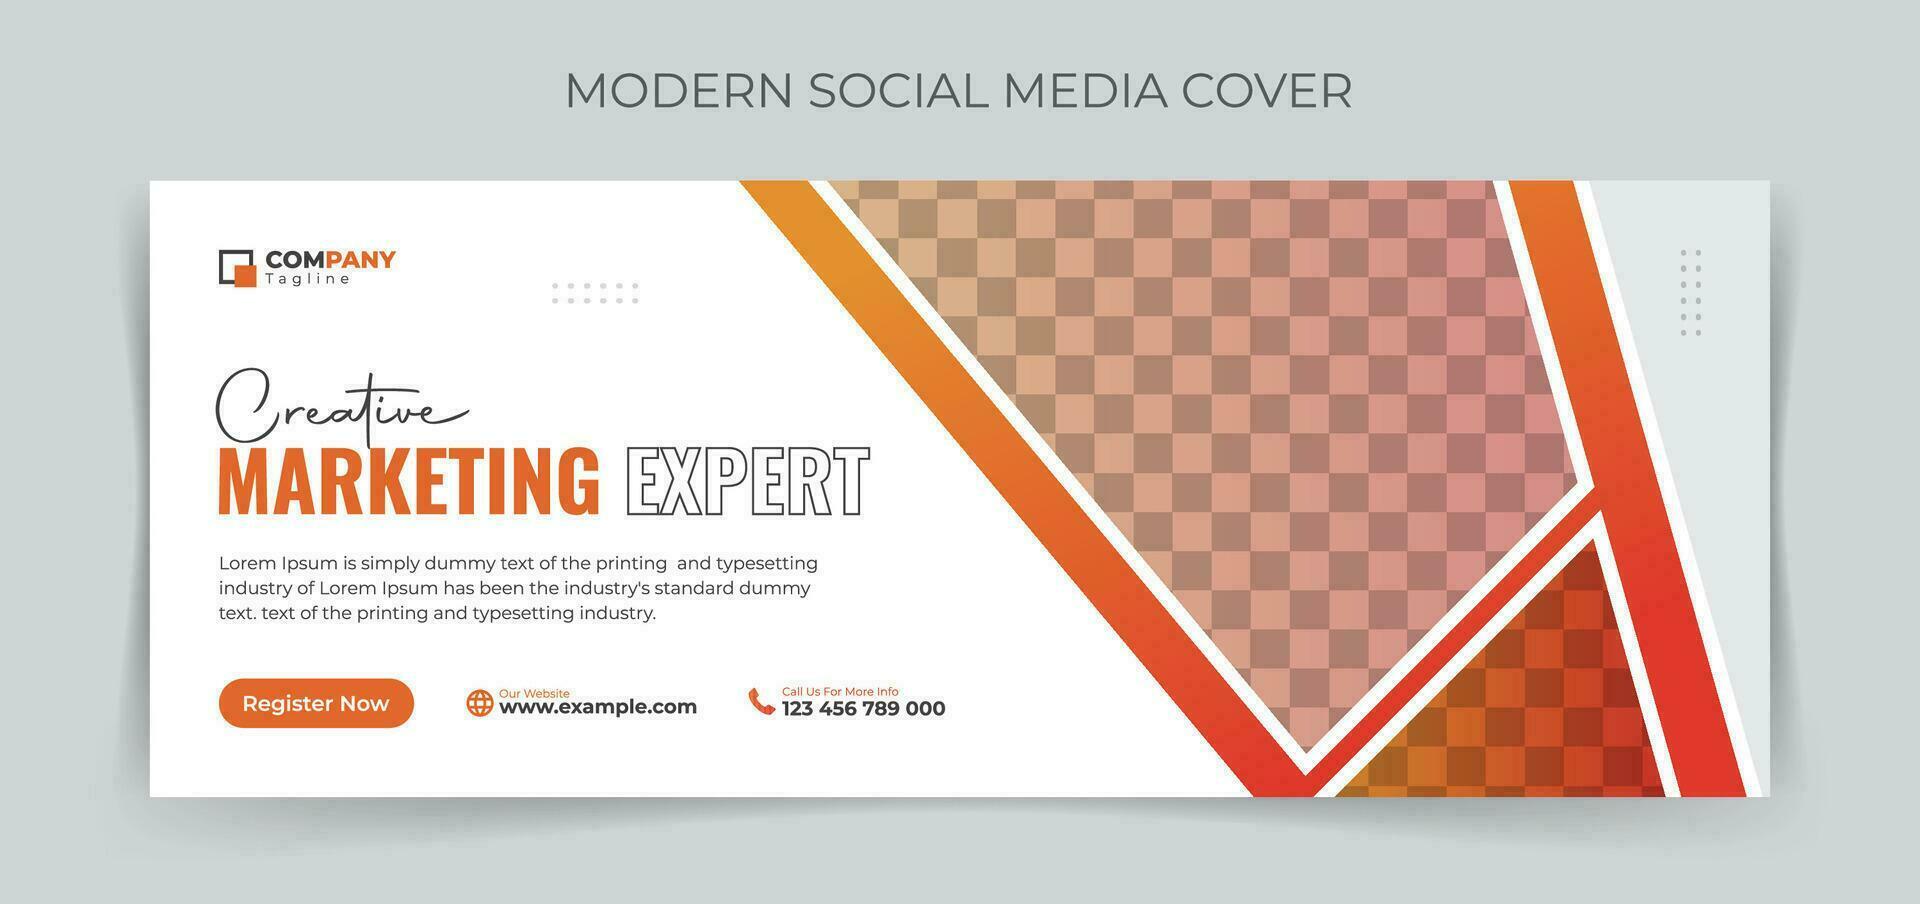 corporativo negocio social medios de comunicación cubrir diseño modelo. vector